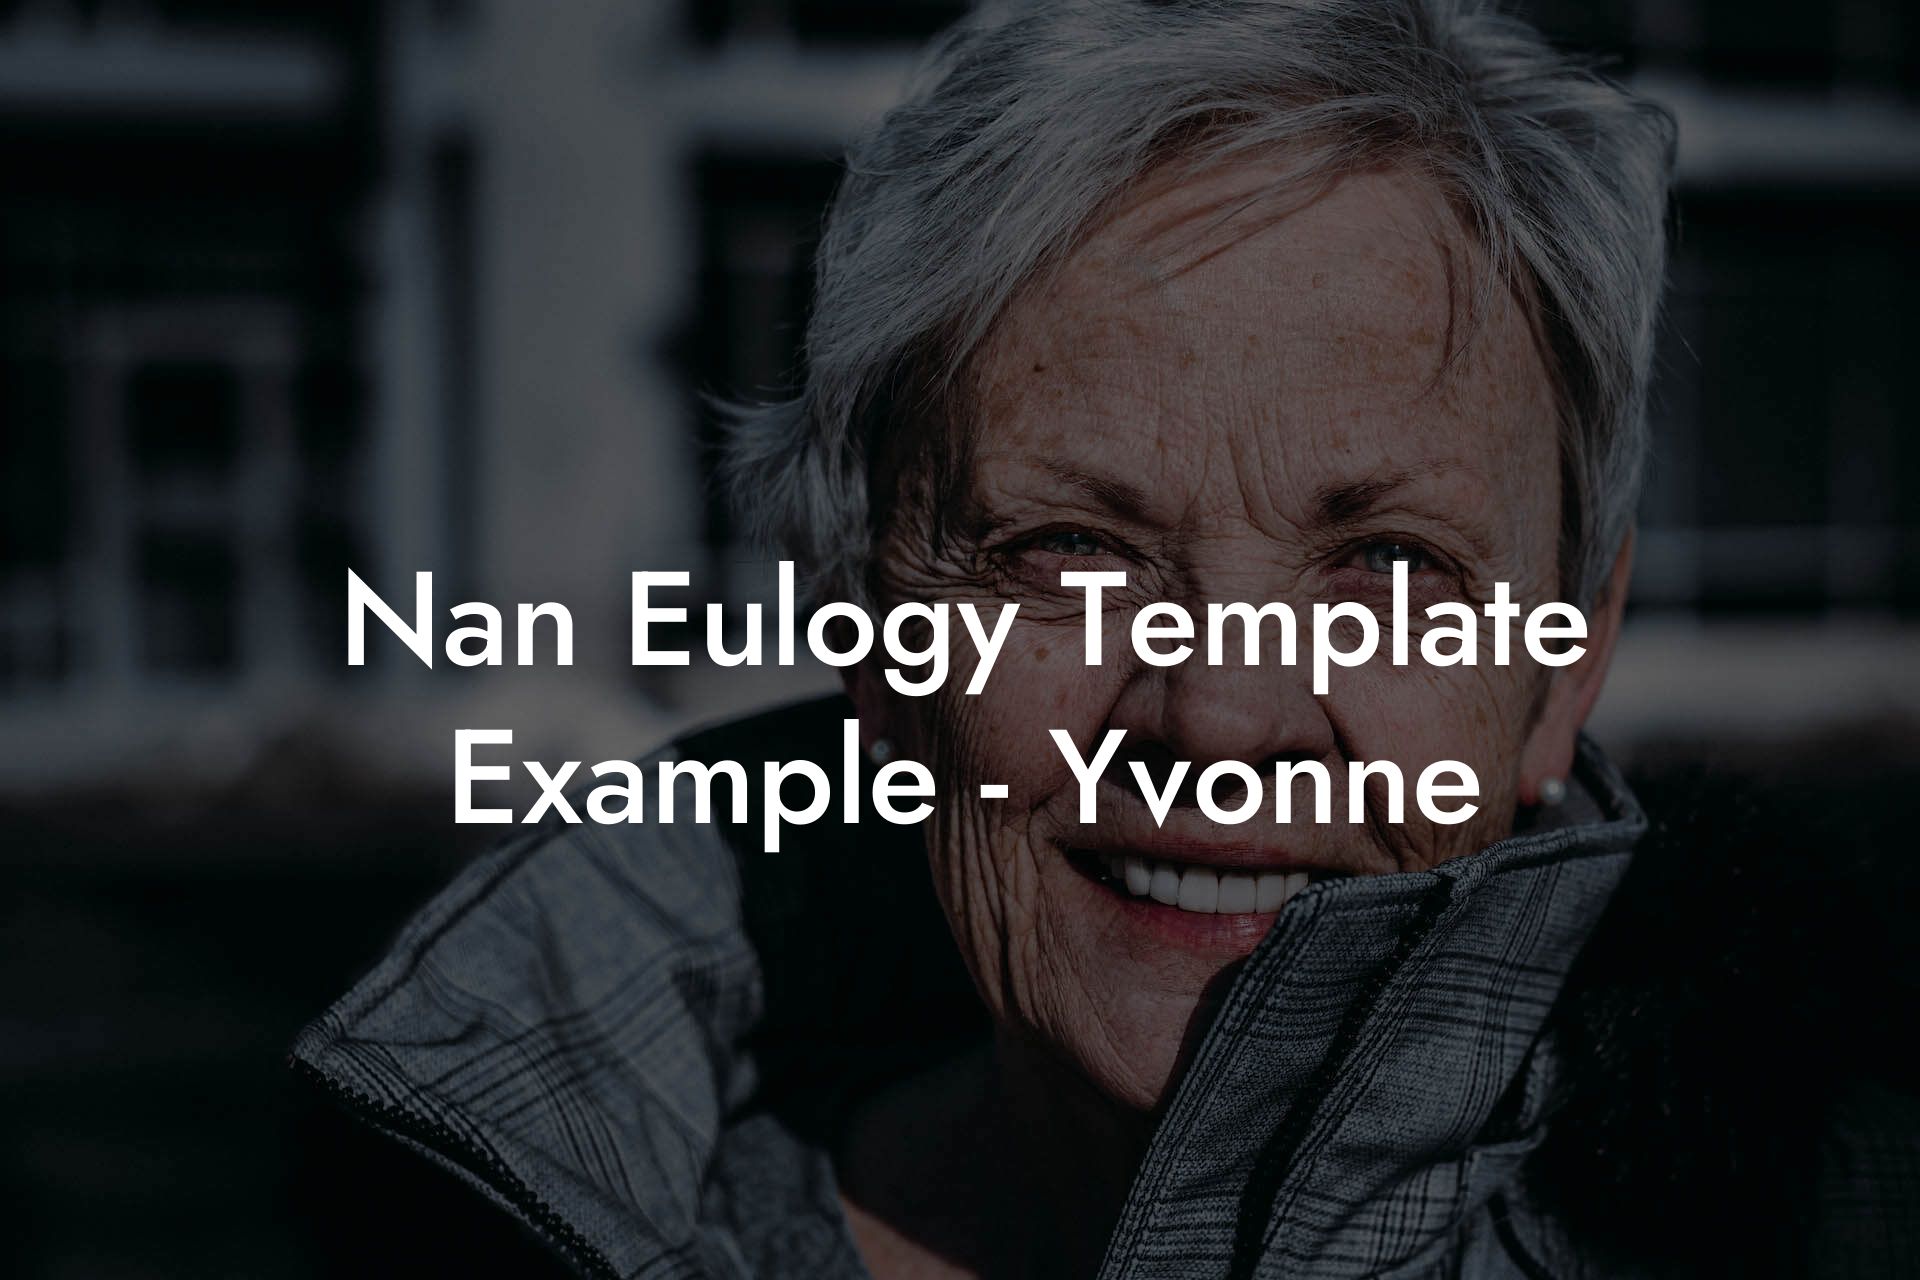 Nan Eulogy Template Example - Yvonne